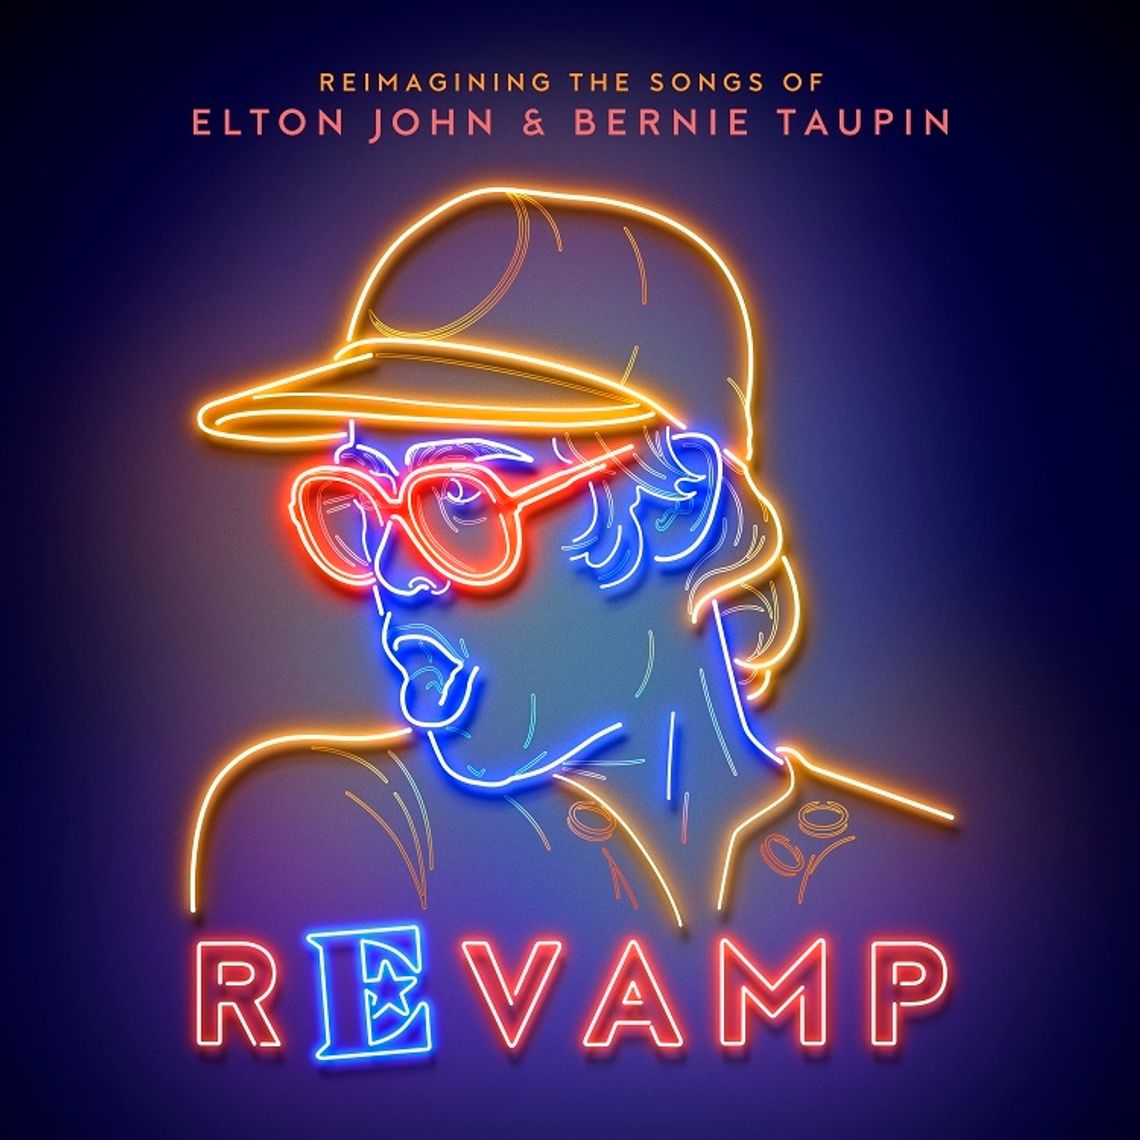 PŁYTA TYGODNIA - ReVamp (Reimagining The Songs Of Elton John And Bernie Taupin)